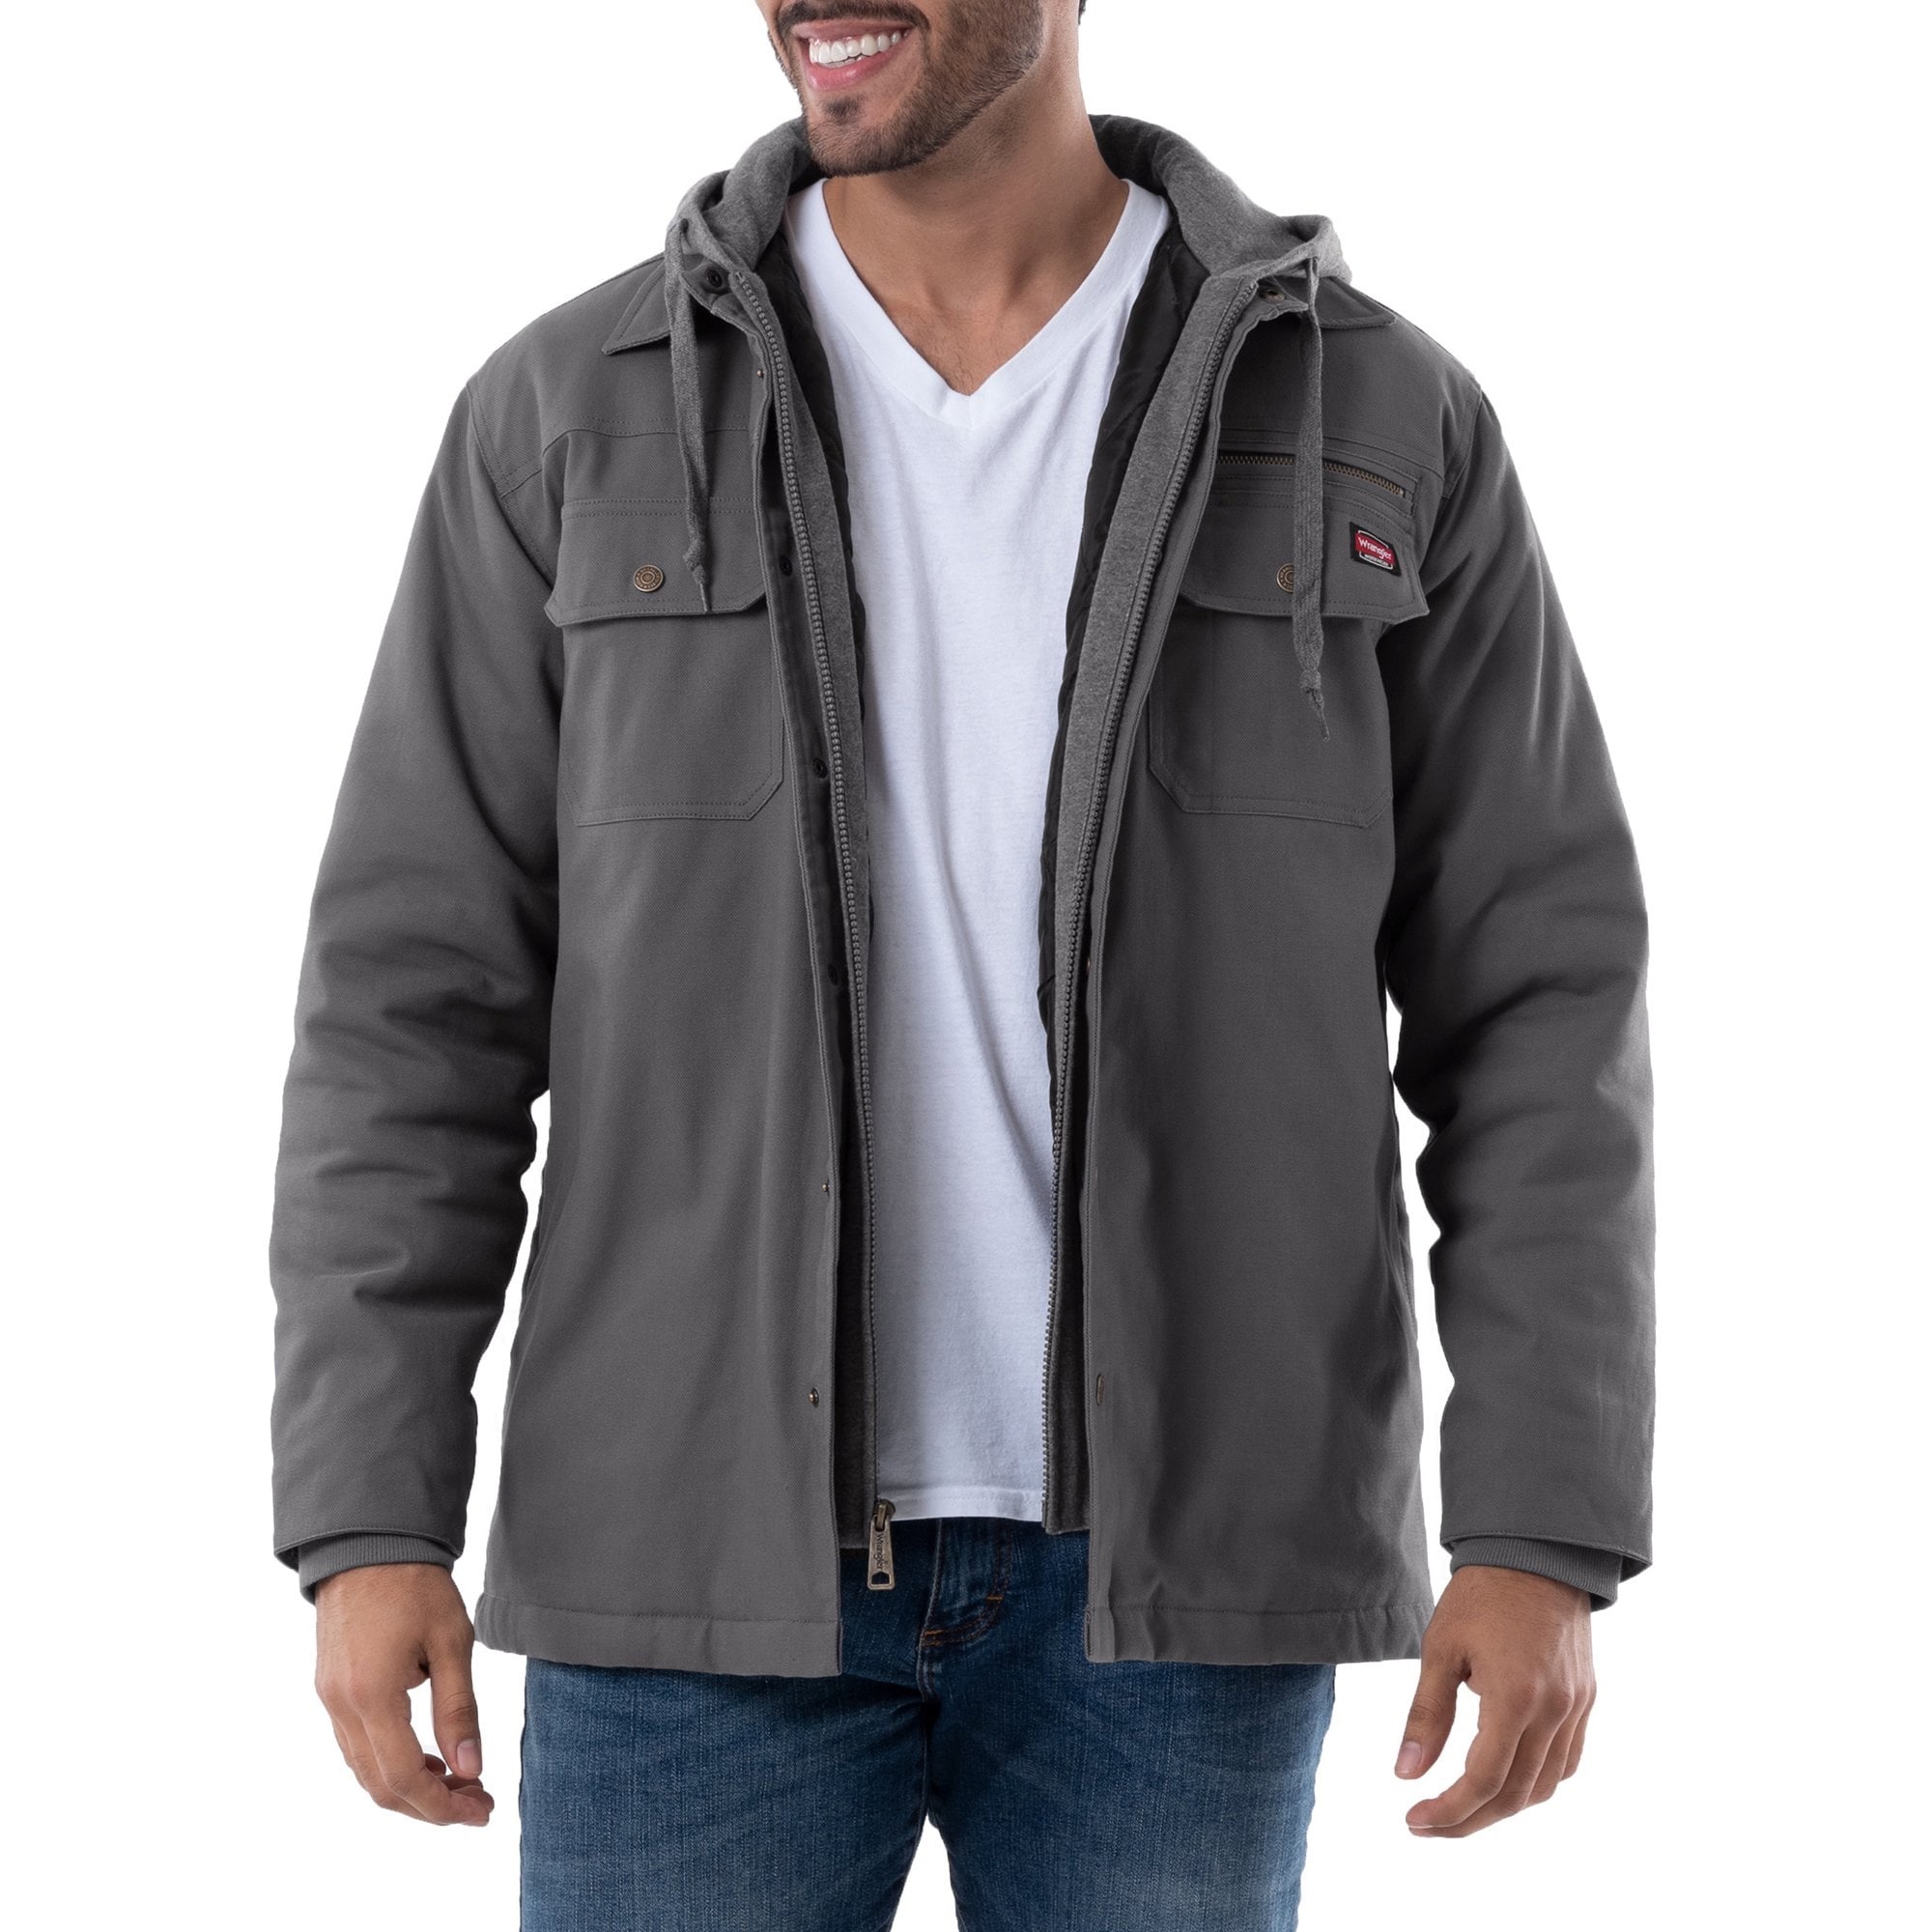 Wrangler Work jacket Workwear at Lowes.com